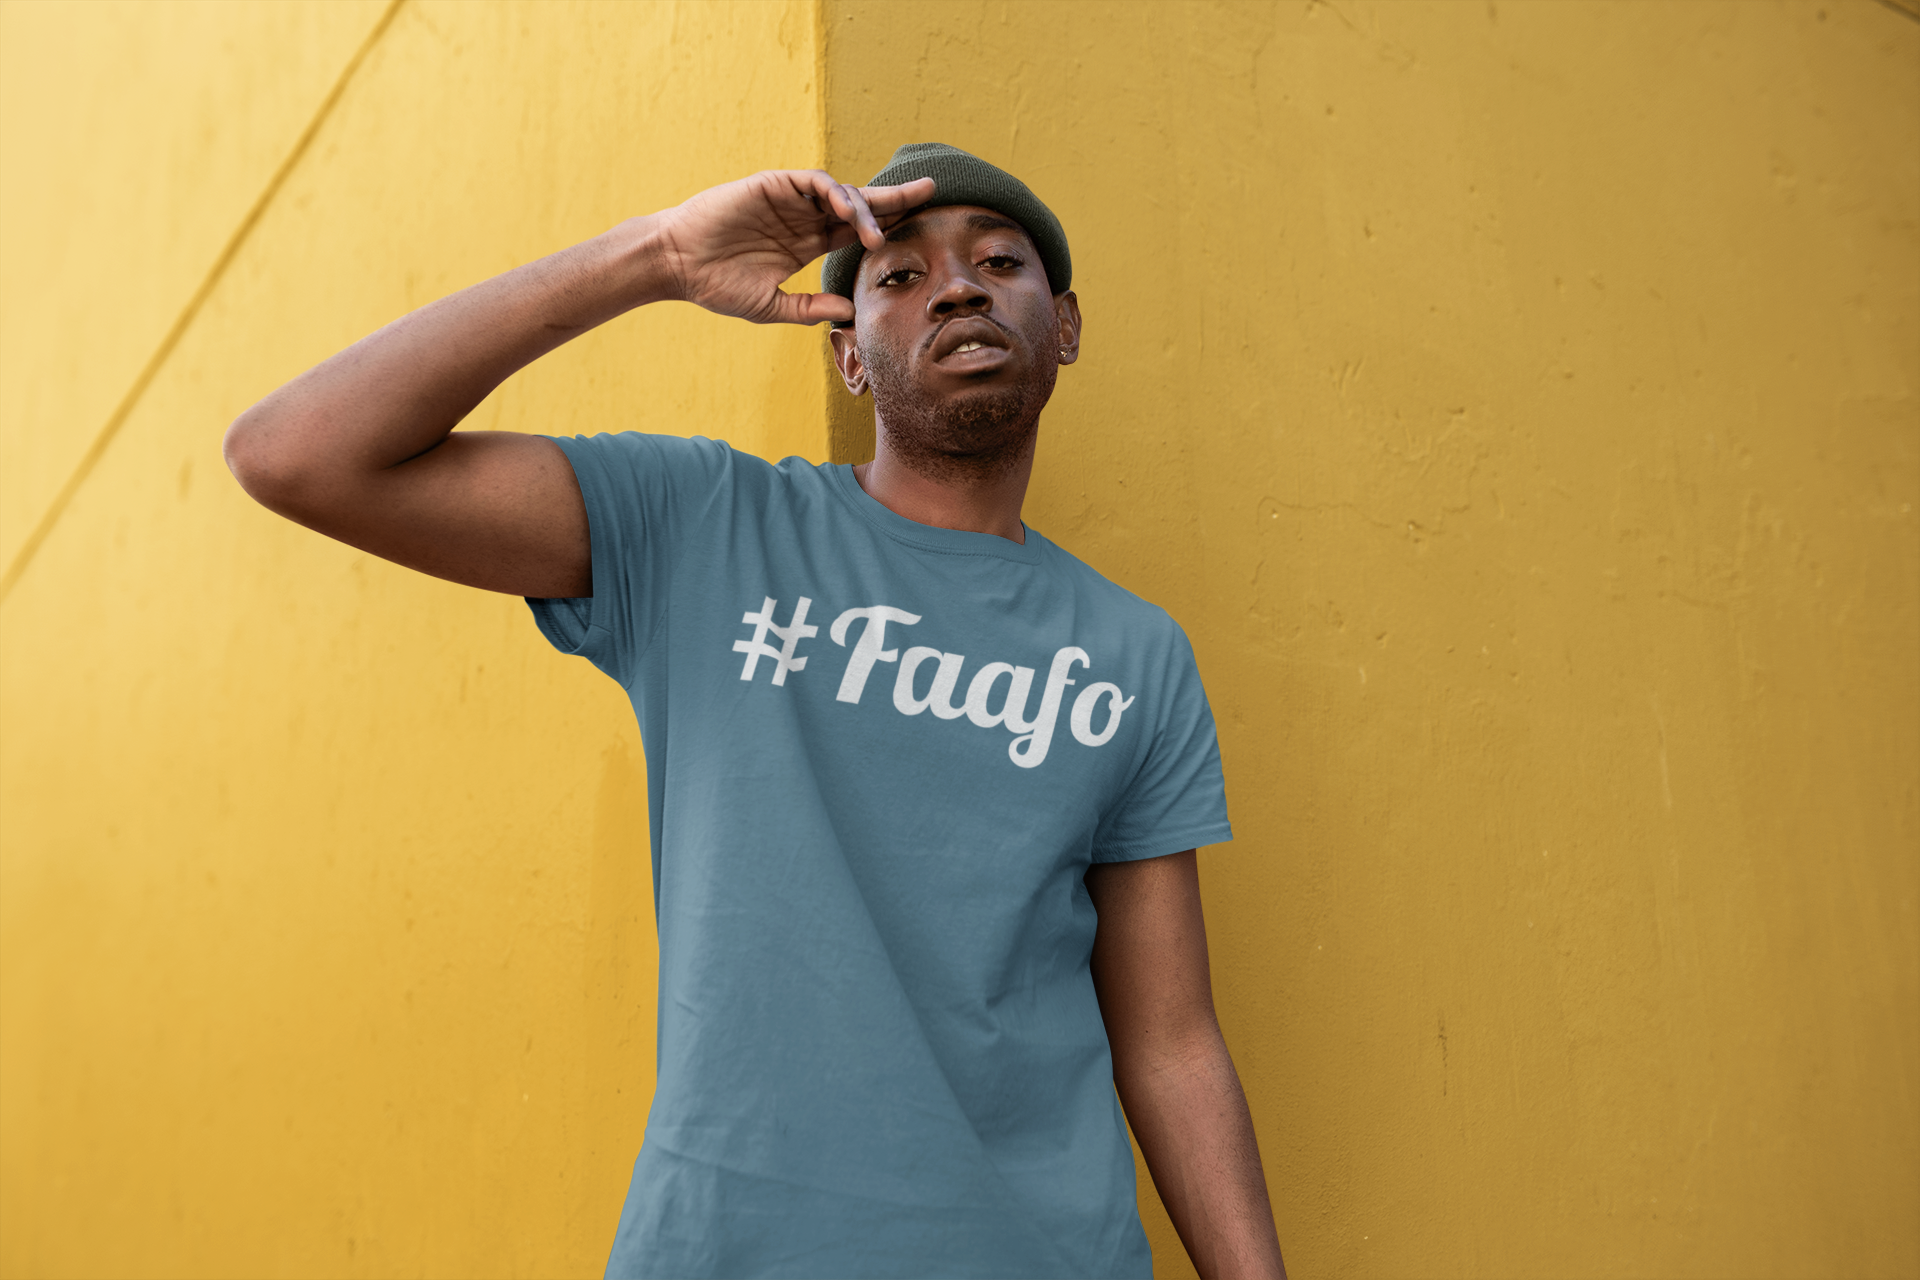 'FAAFO' Short-Sleeve Men's T-Shirt